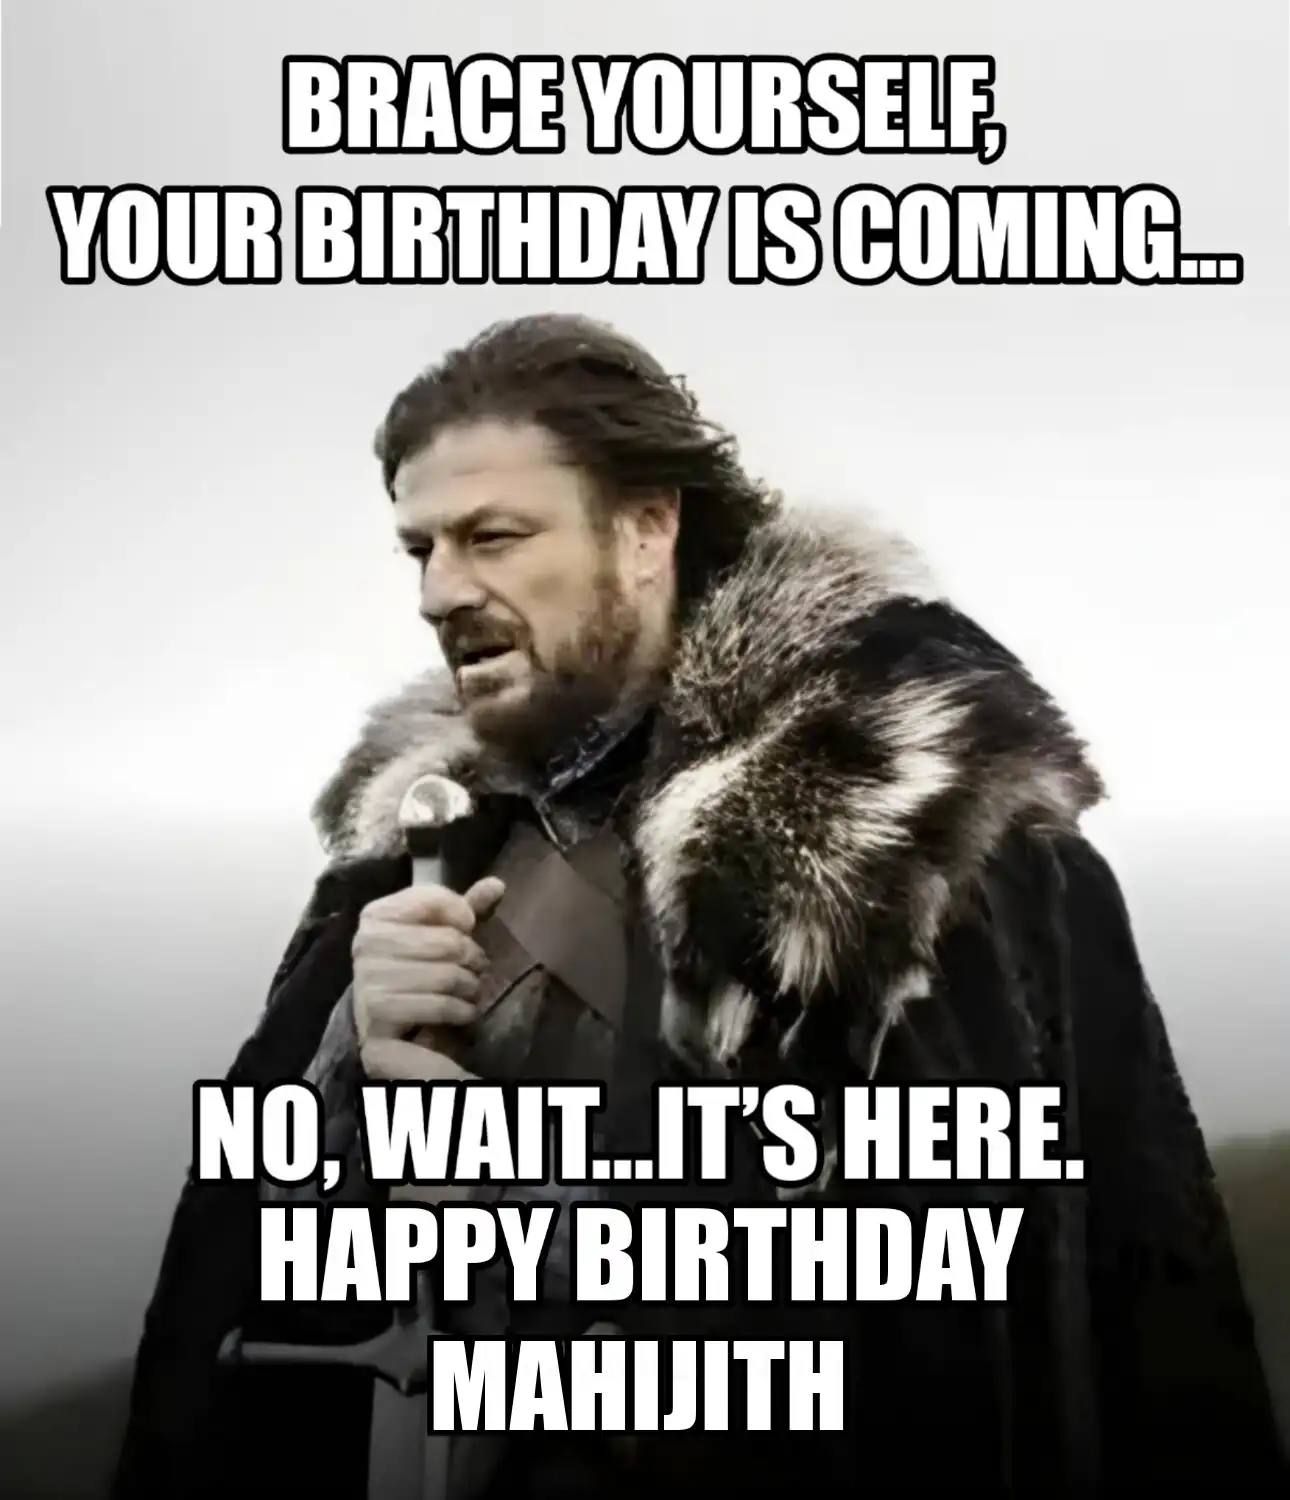 Happy Birthday Mahijith Brace Yourself Your Birthday Is Coming Meme